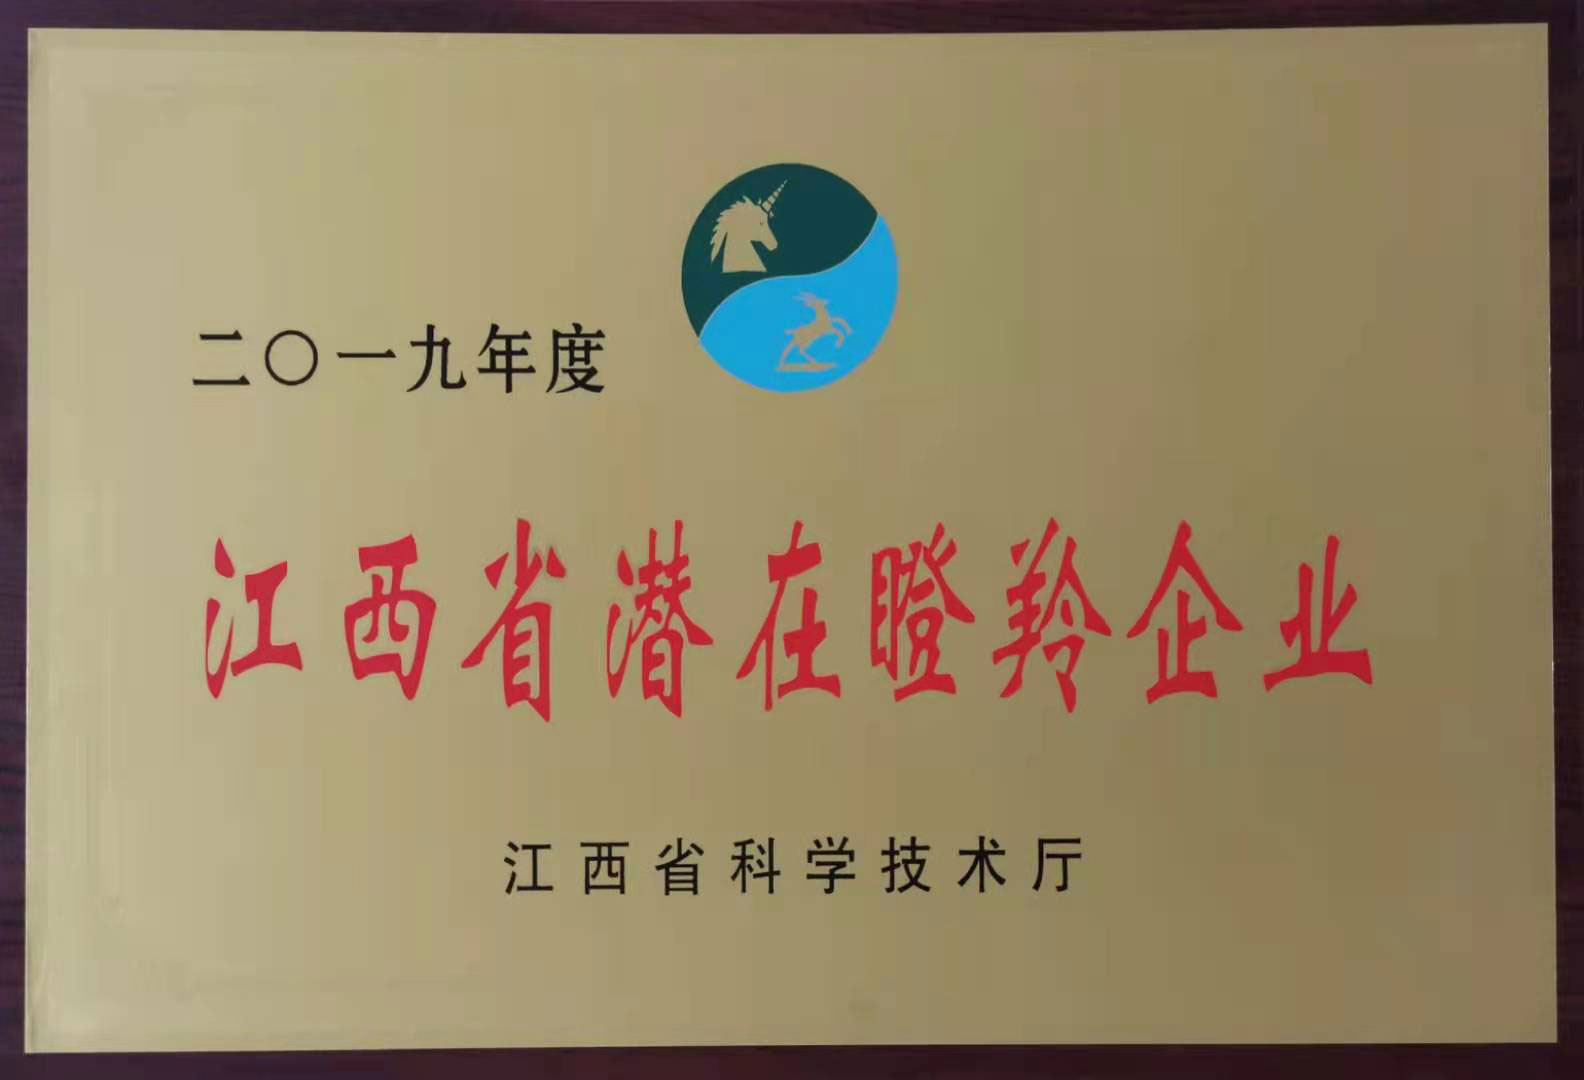 Potential gazelle enterprises in Jiangxi Province